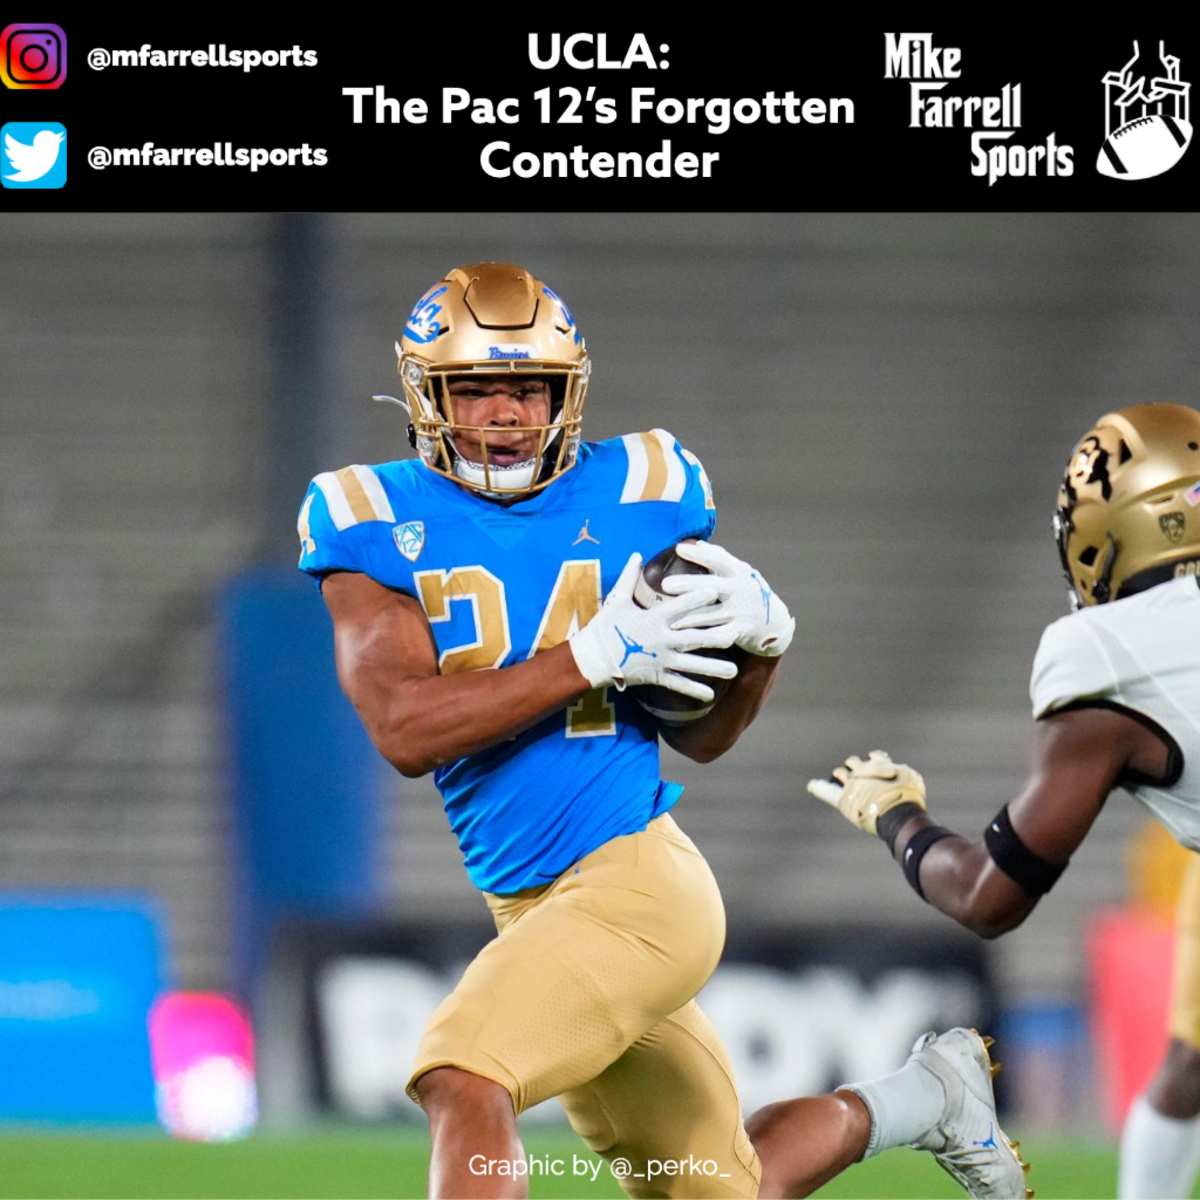 UCLA: The Pac 12's Forgotten Program